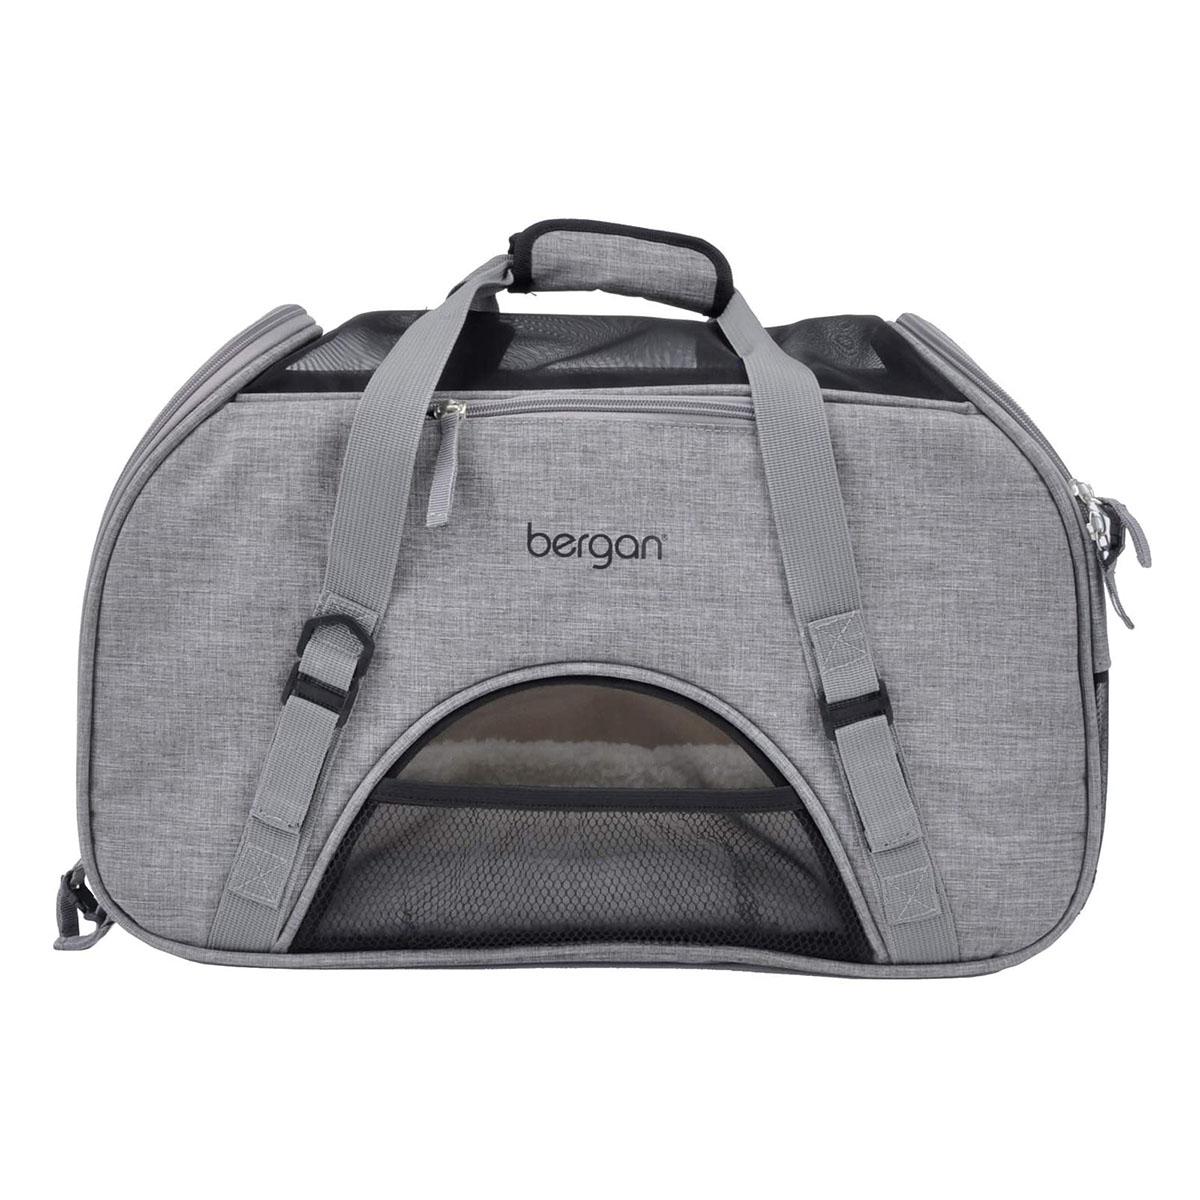 Bergan Comfort Pet Carrier - Grey